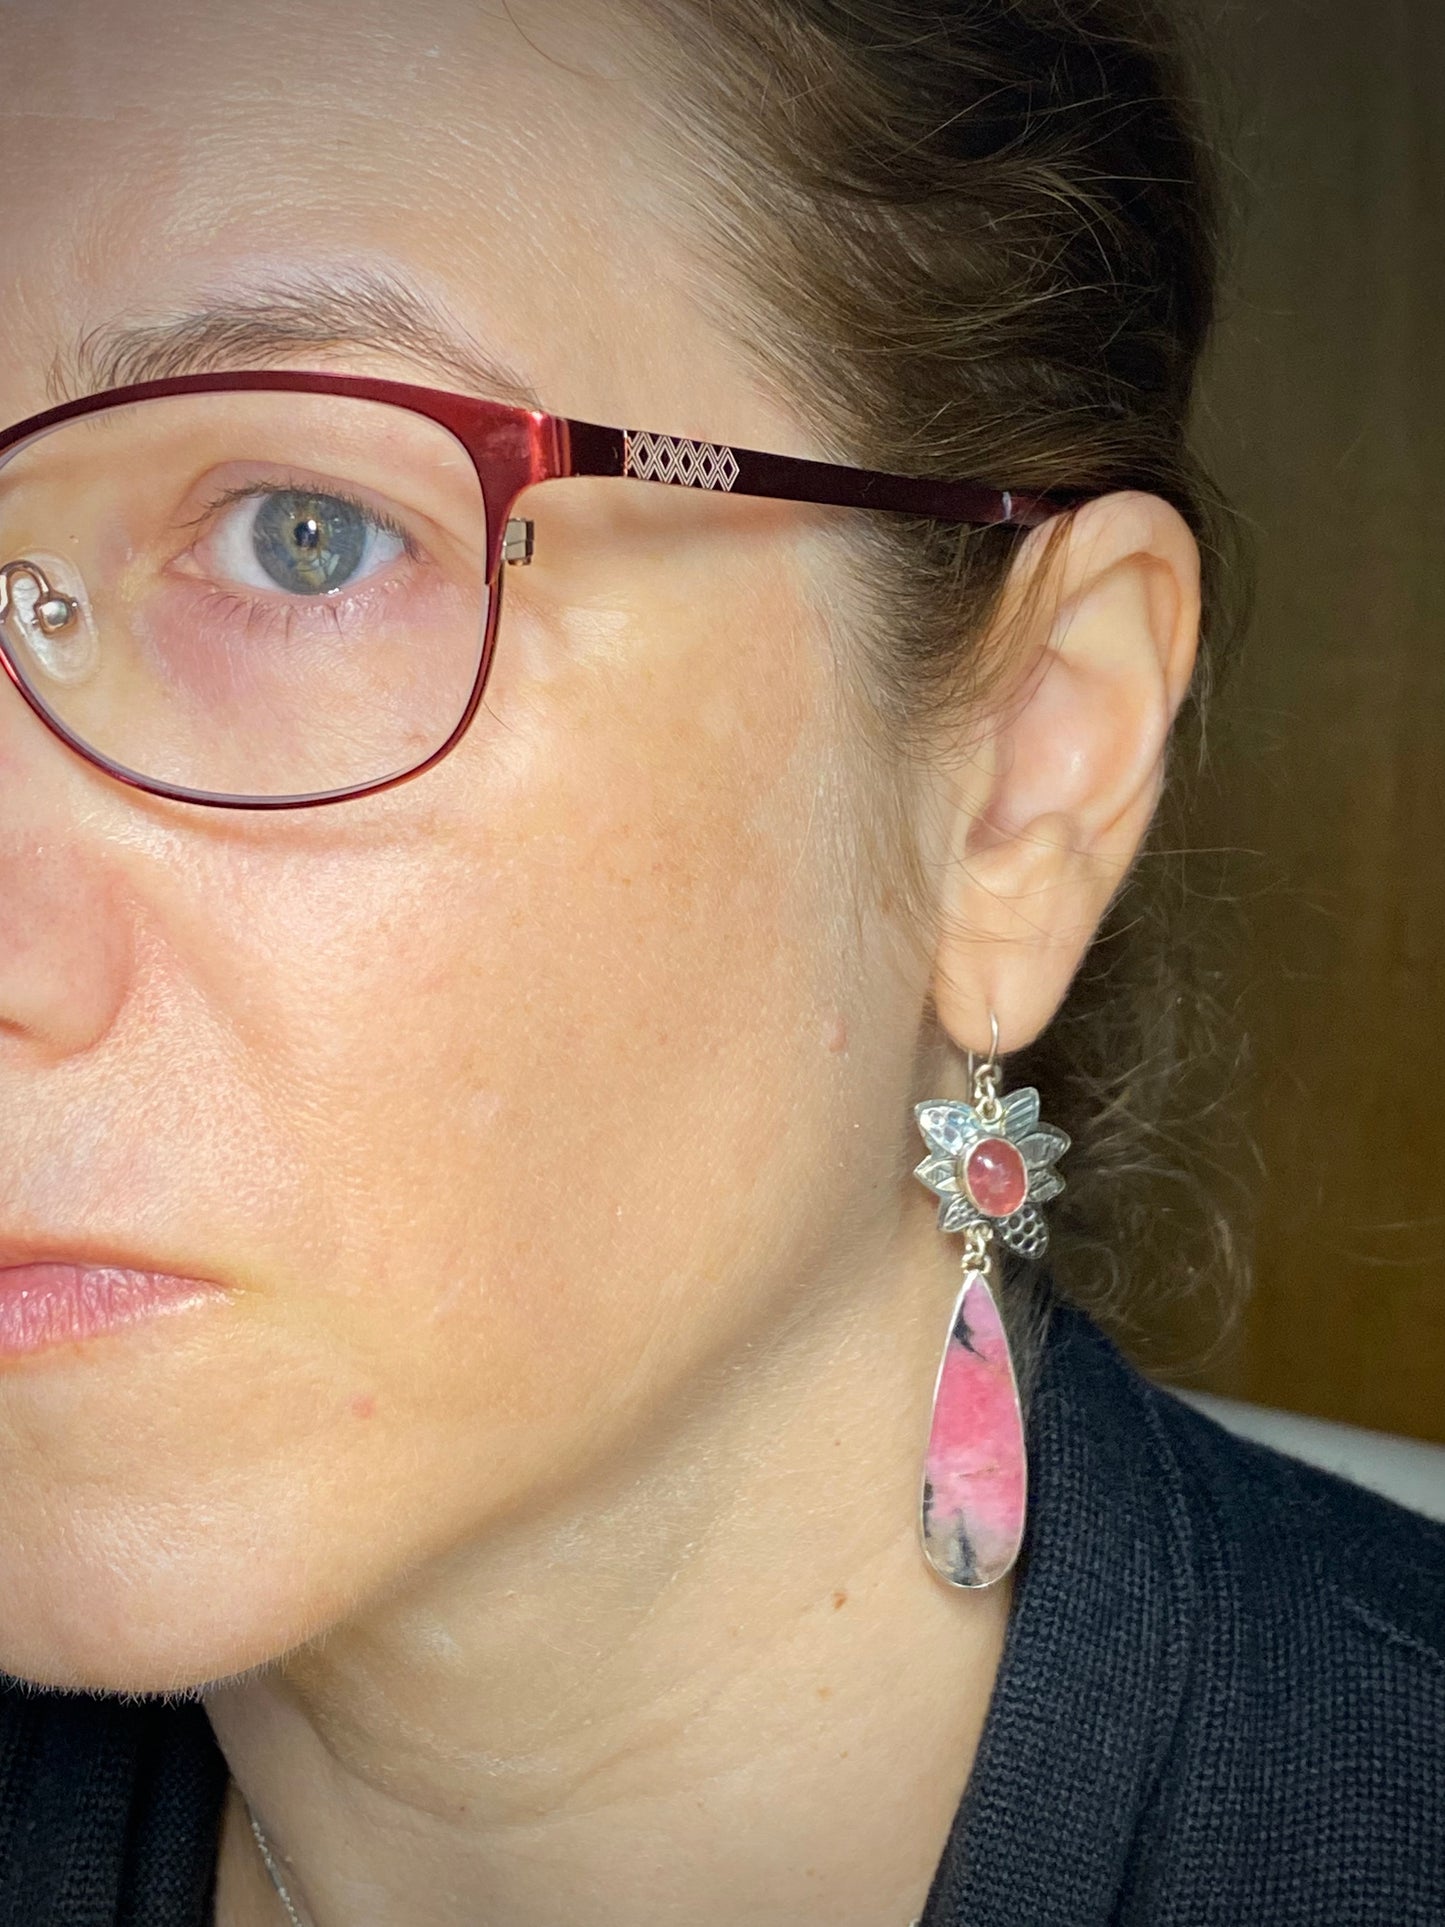 Petal series - Pink Toumaline and Rhodonite petal earrings